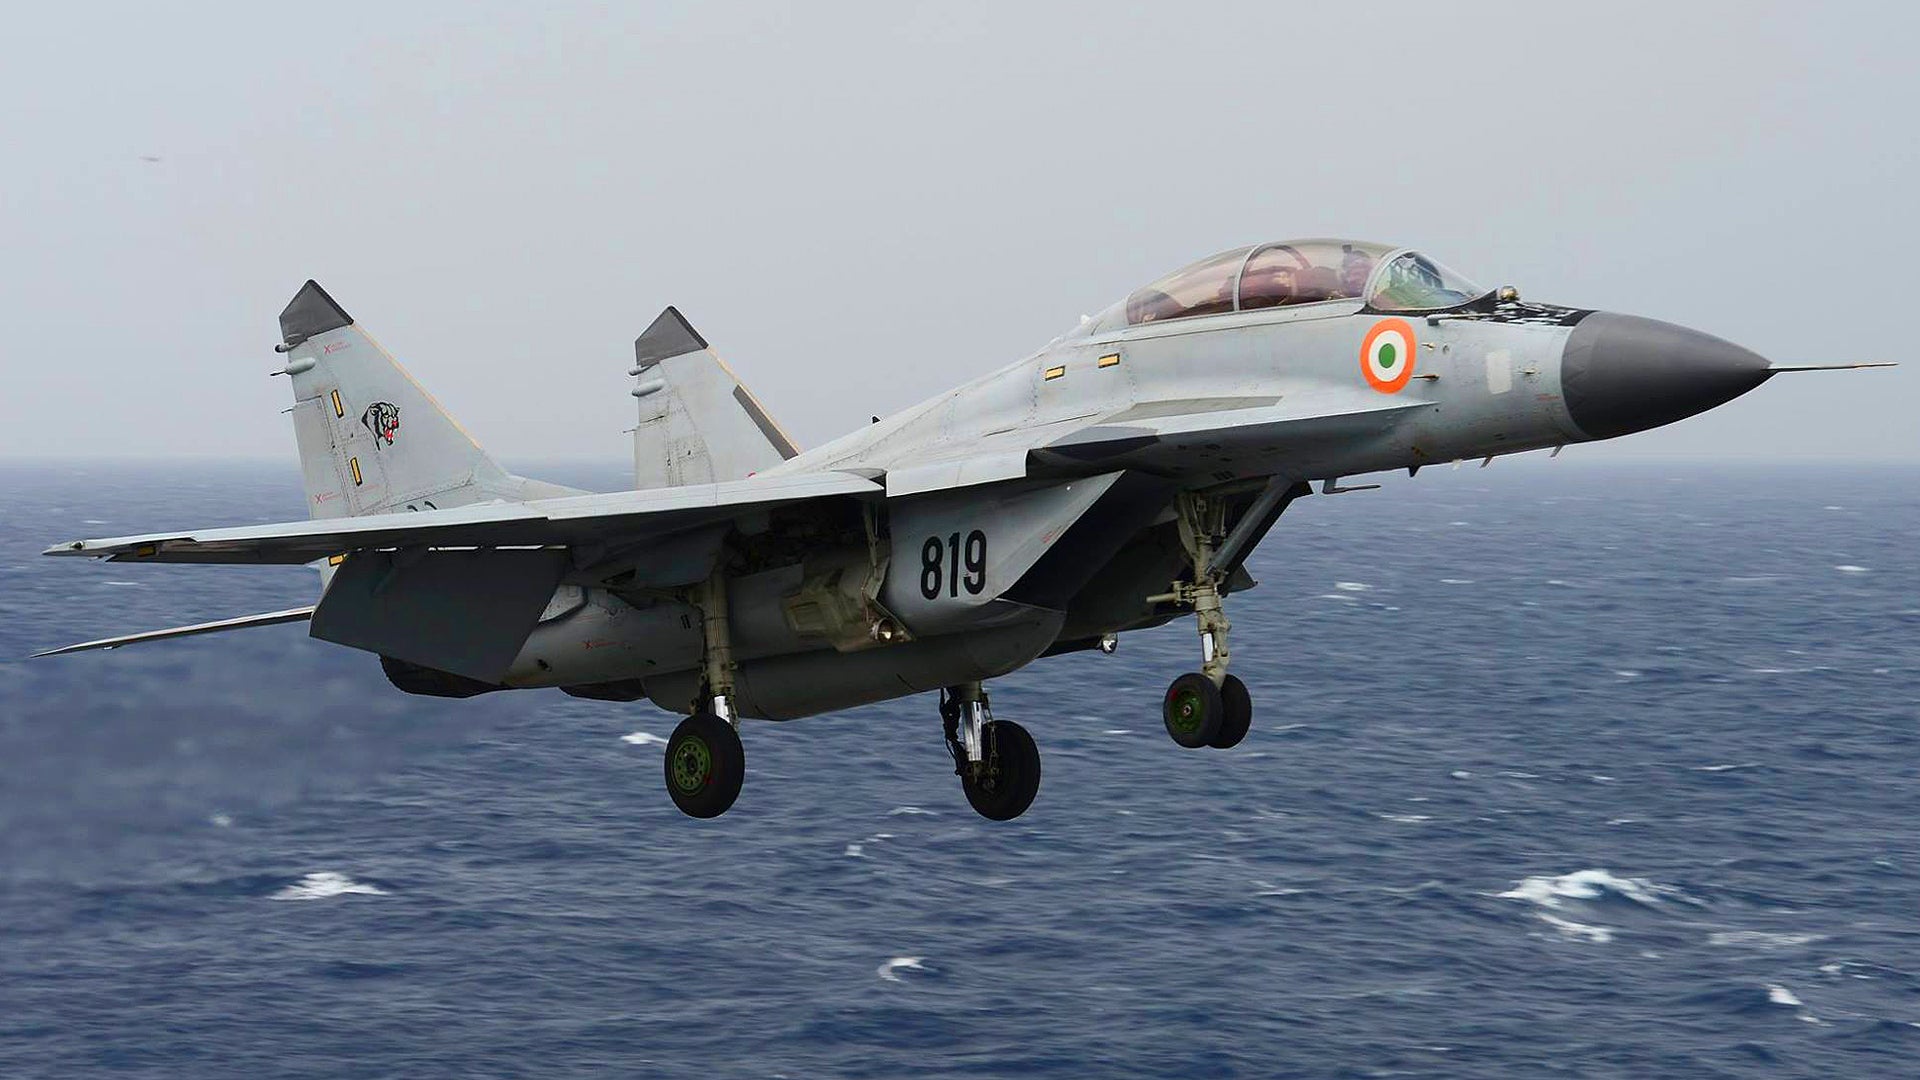 Indian Navy MiG-29Ks Make Low Approaches To USS Nimitz During “Malabar” Drills